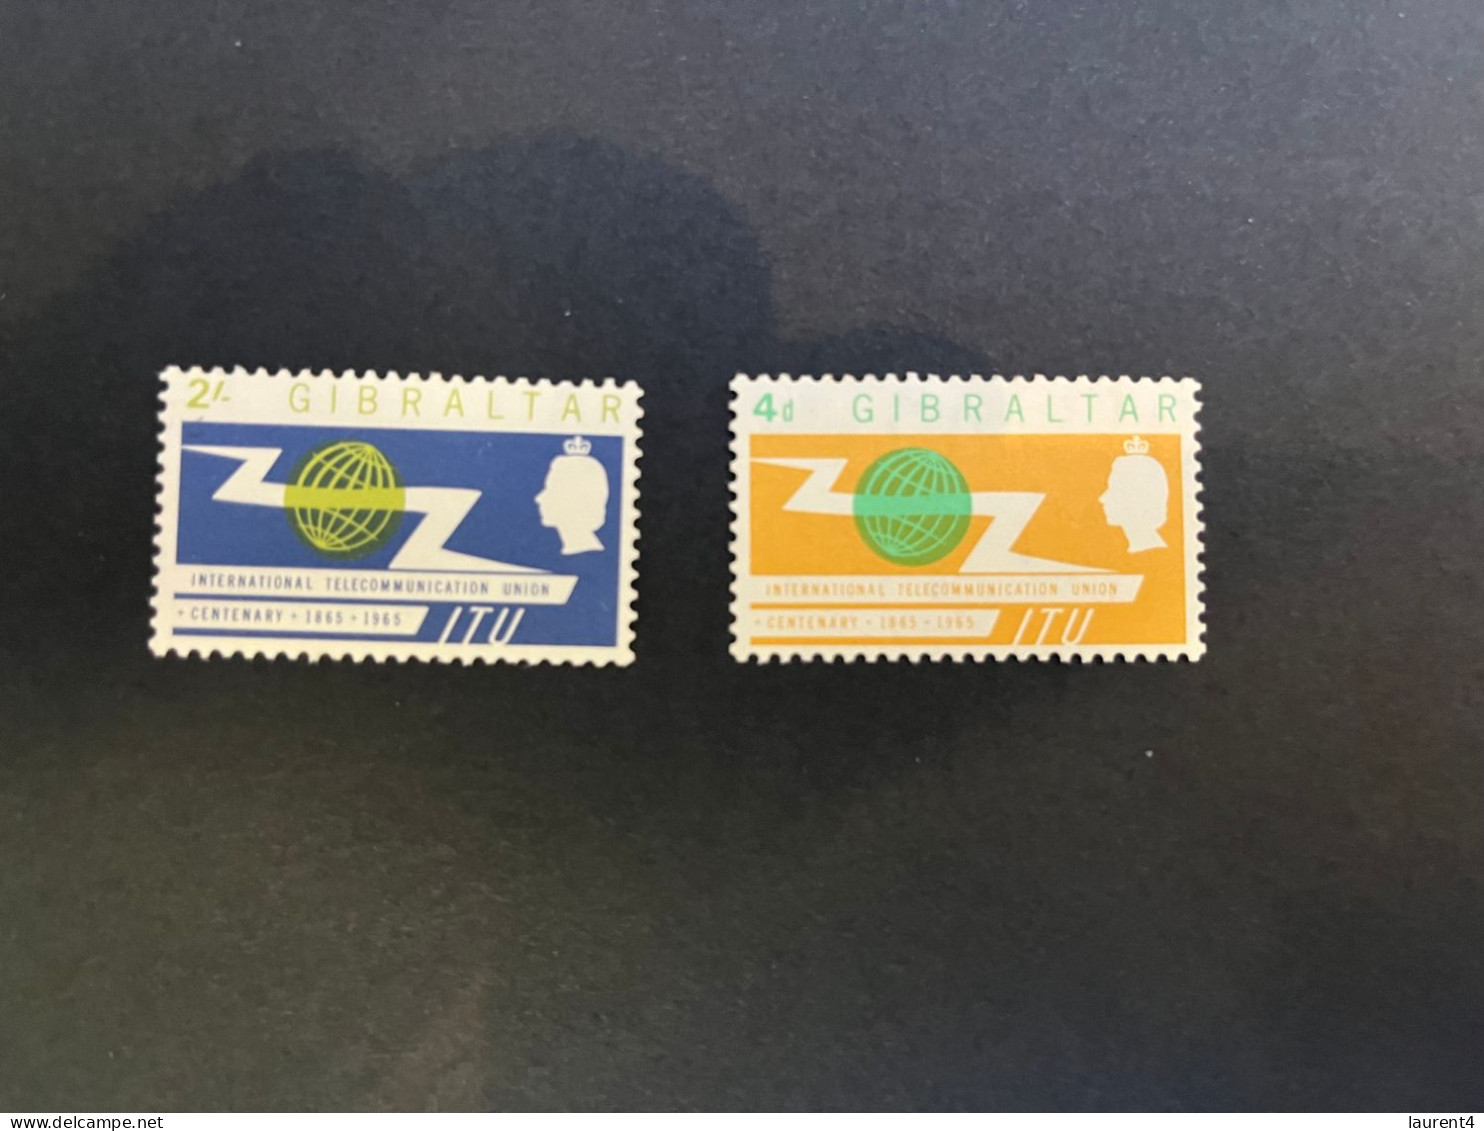 14-5-2024 (stamp) Neuf / Mint - Telecommunication Union 1965 - Gibraltar (2 Values) - Gibraltar